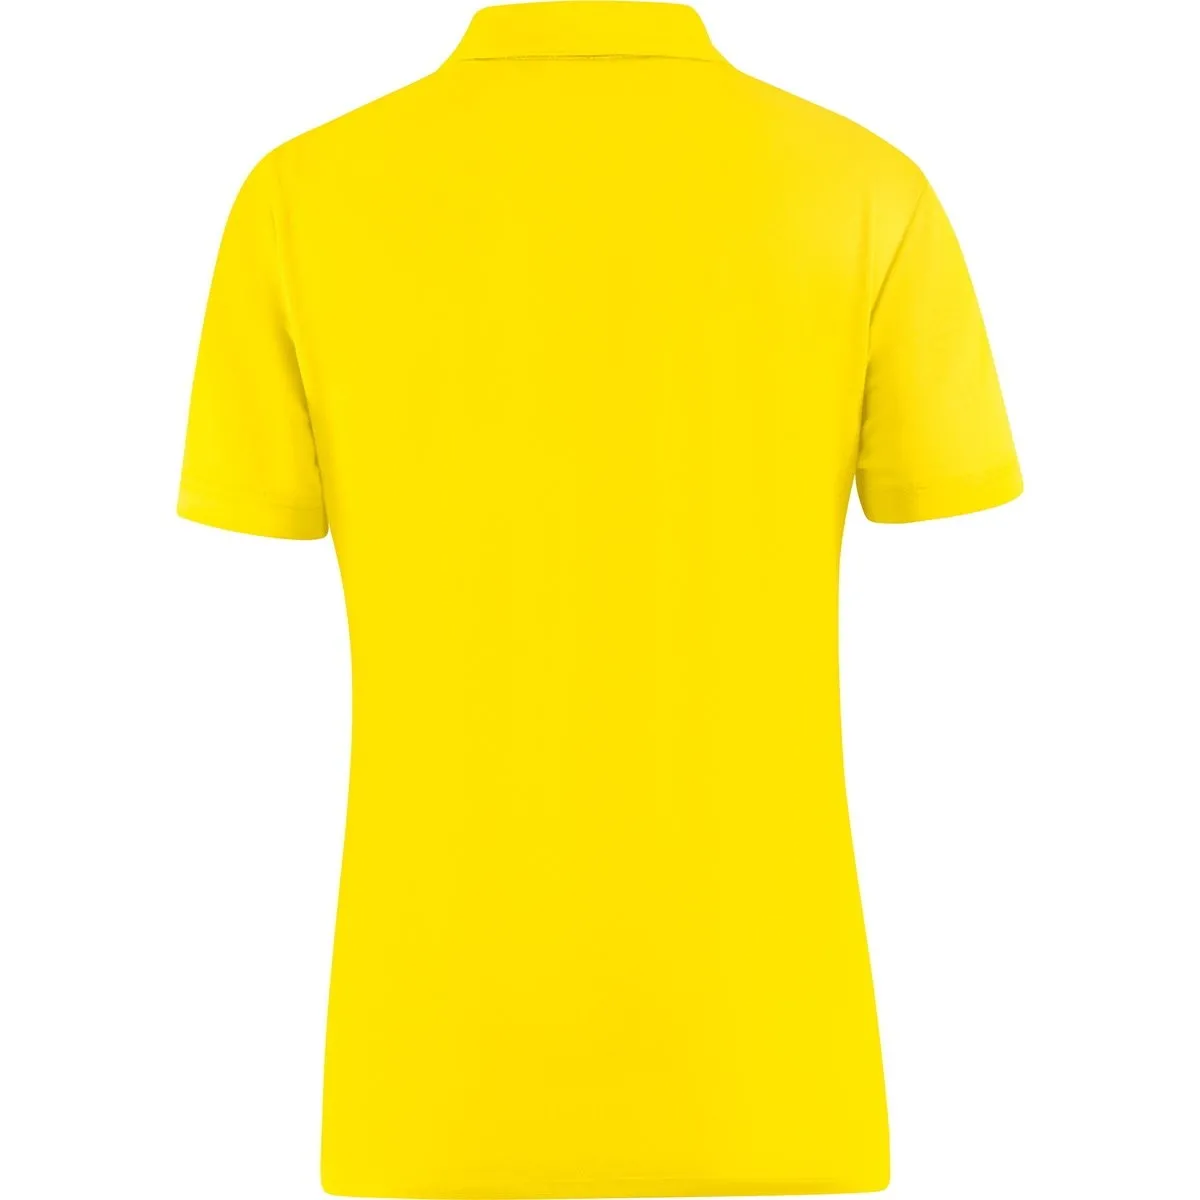 Jako Polo Shirt Classico yellow